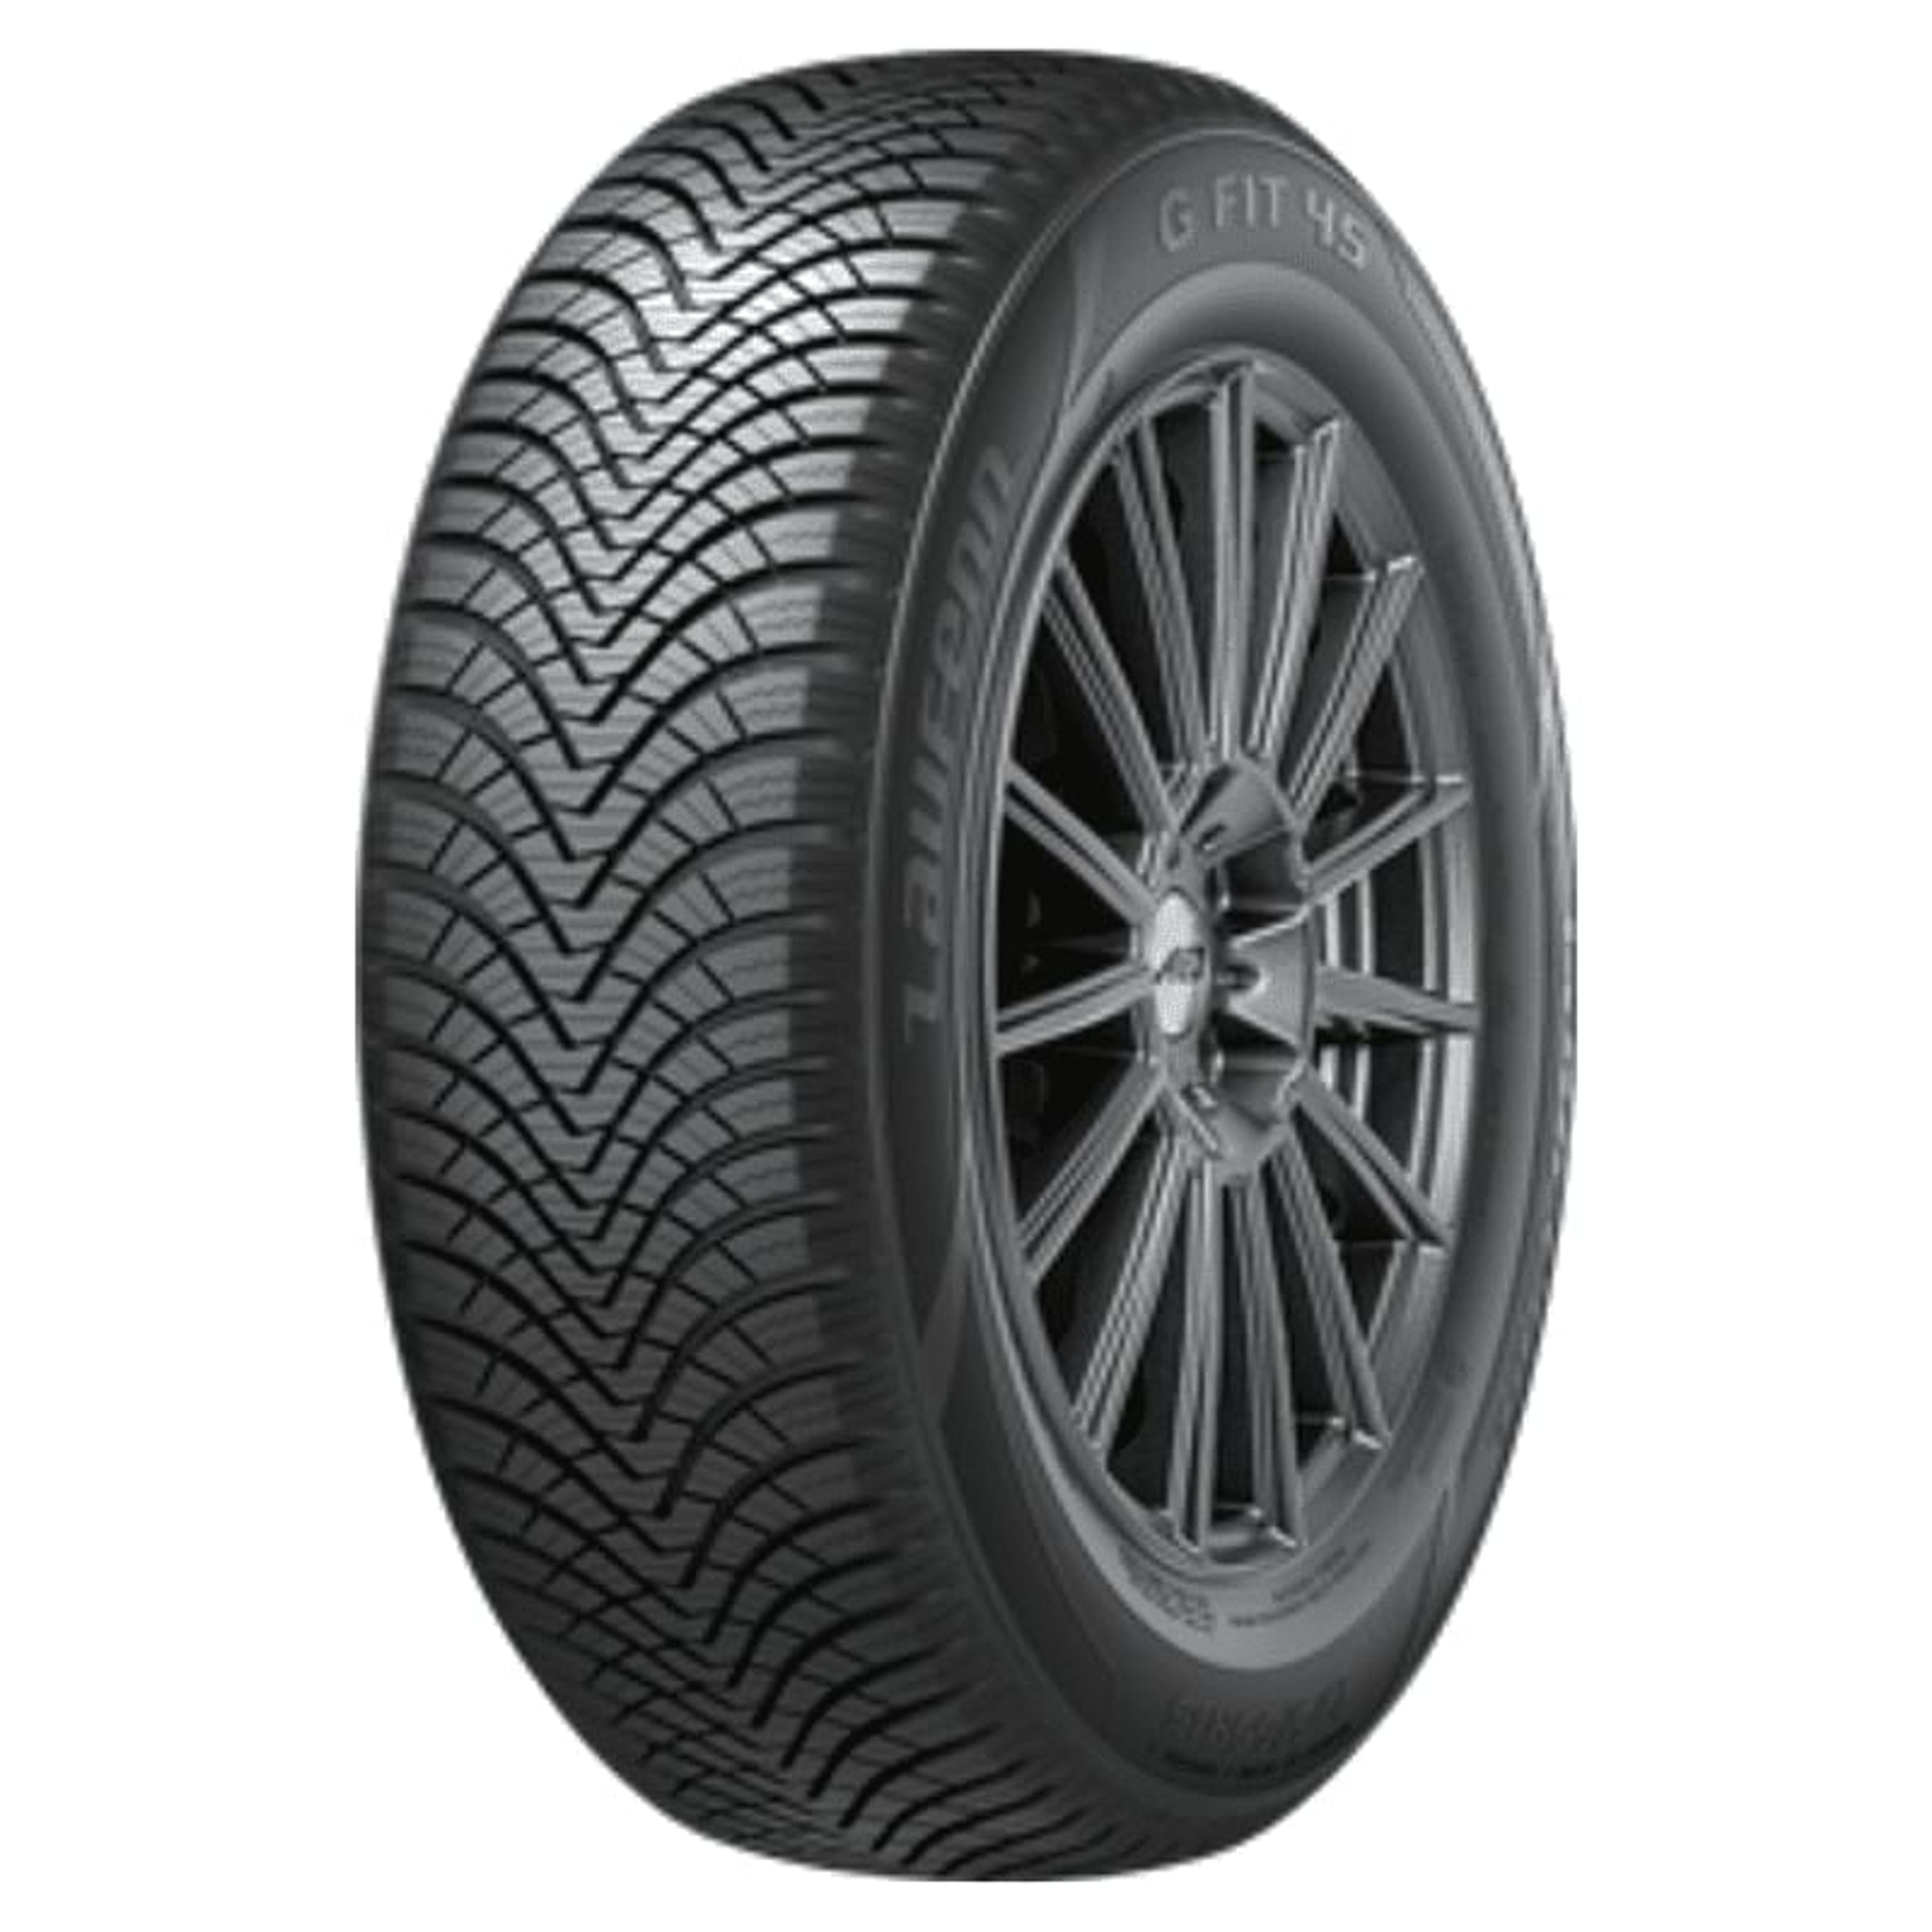 SimpleTire G Buy 4S Tires Online | FIT Laufenn